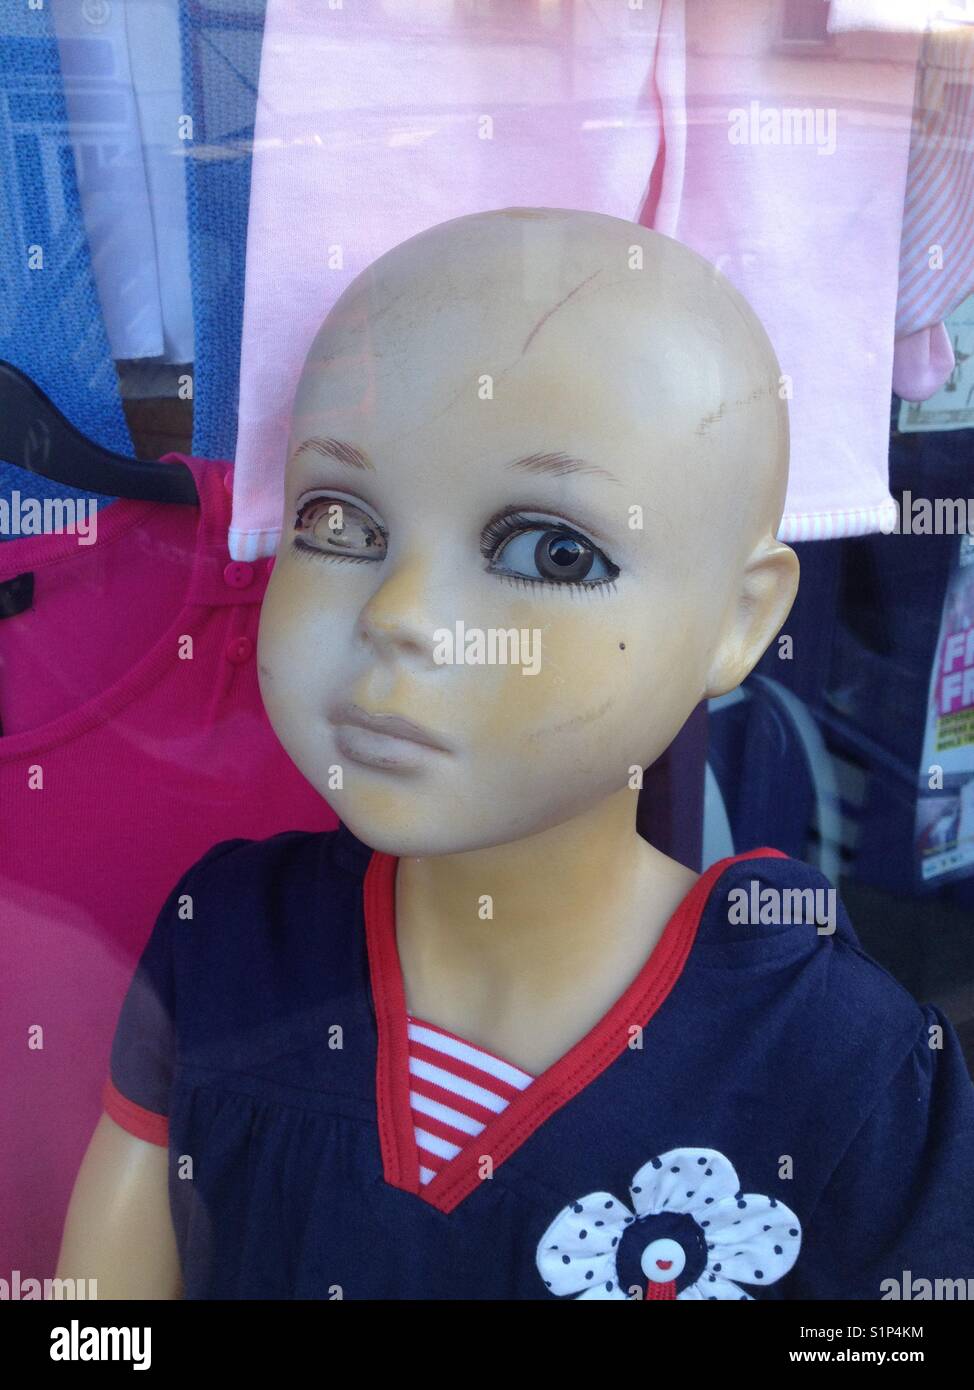 Creepy child mannequin in shop window Stock Photo - Alamy